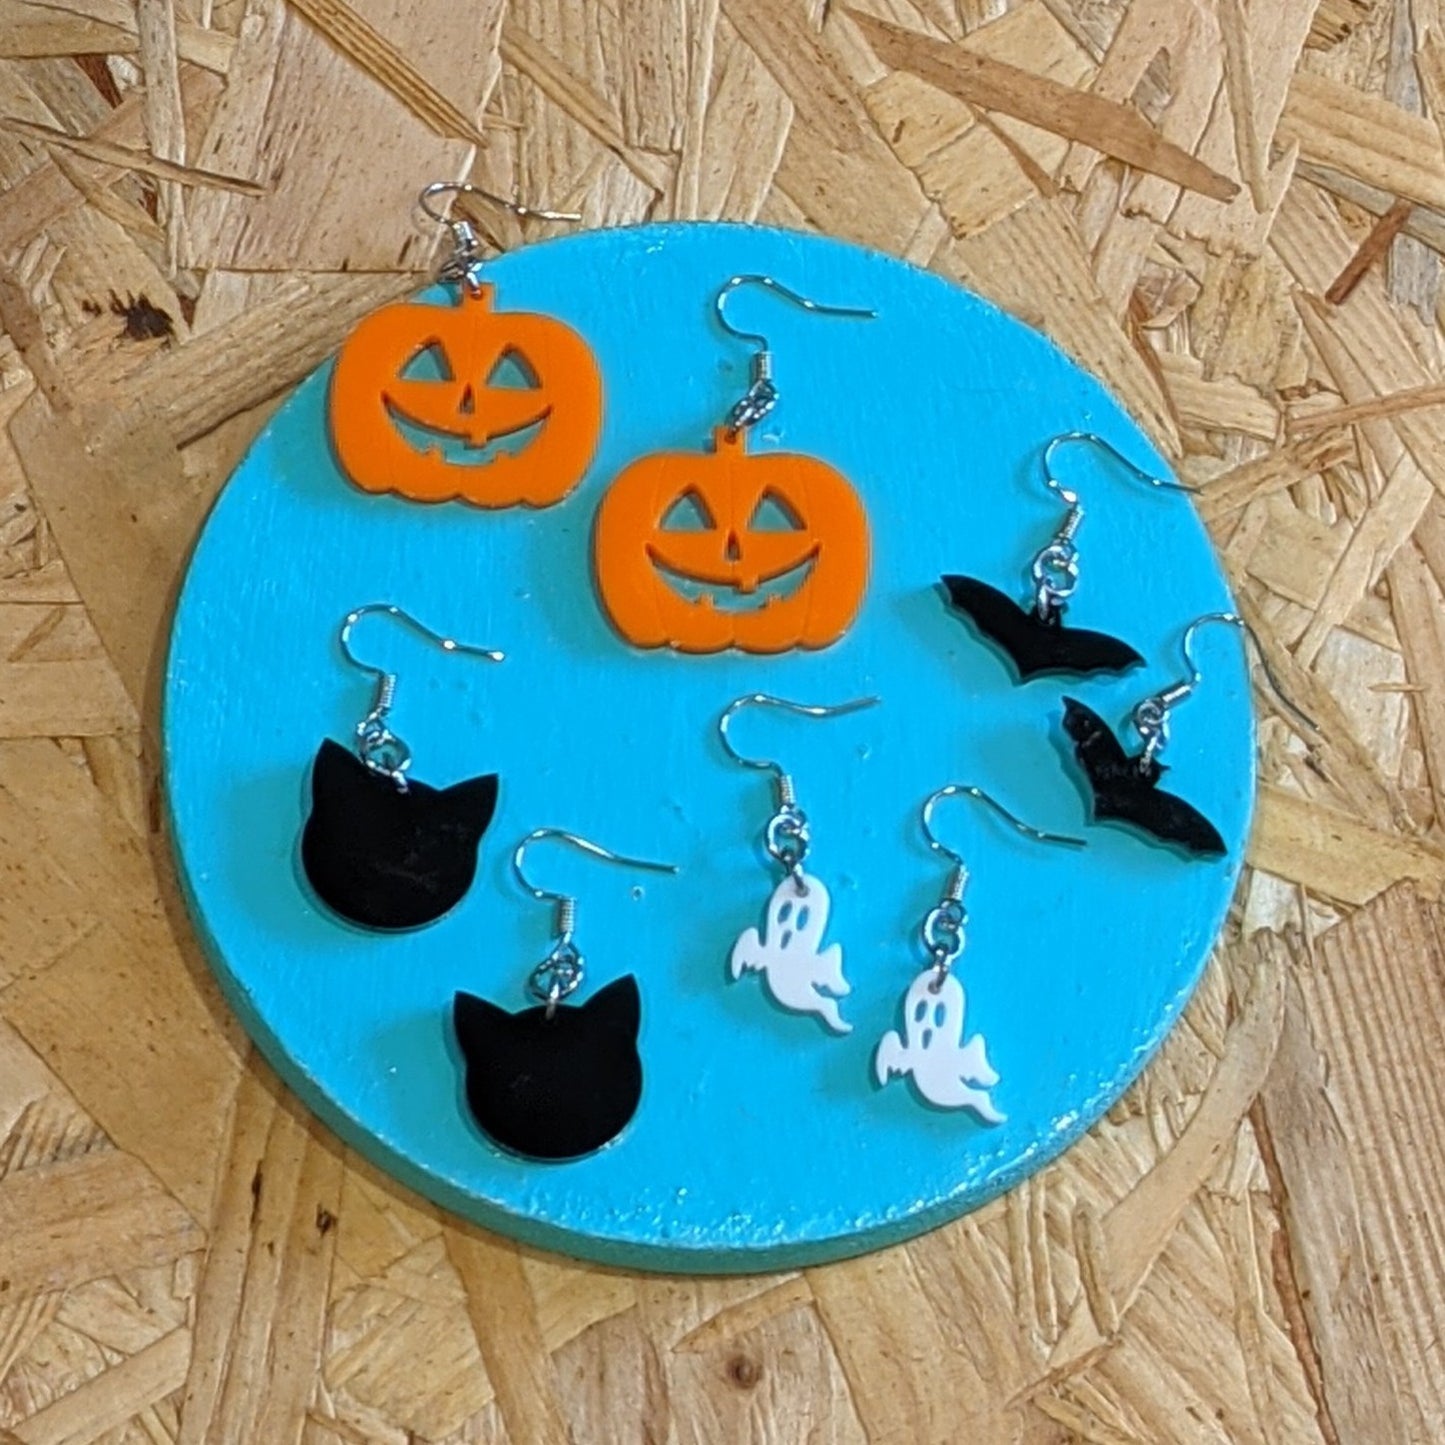 Spooky earrings by Han Makes